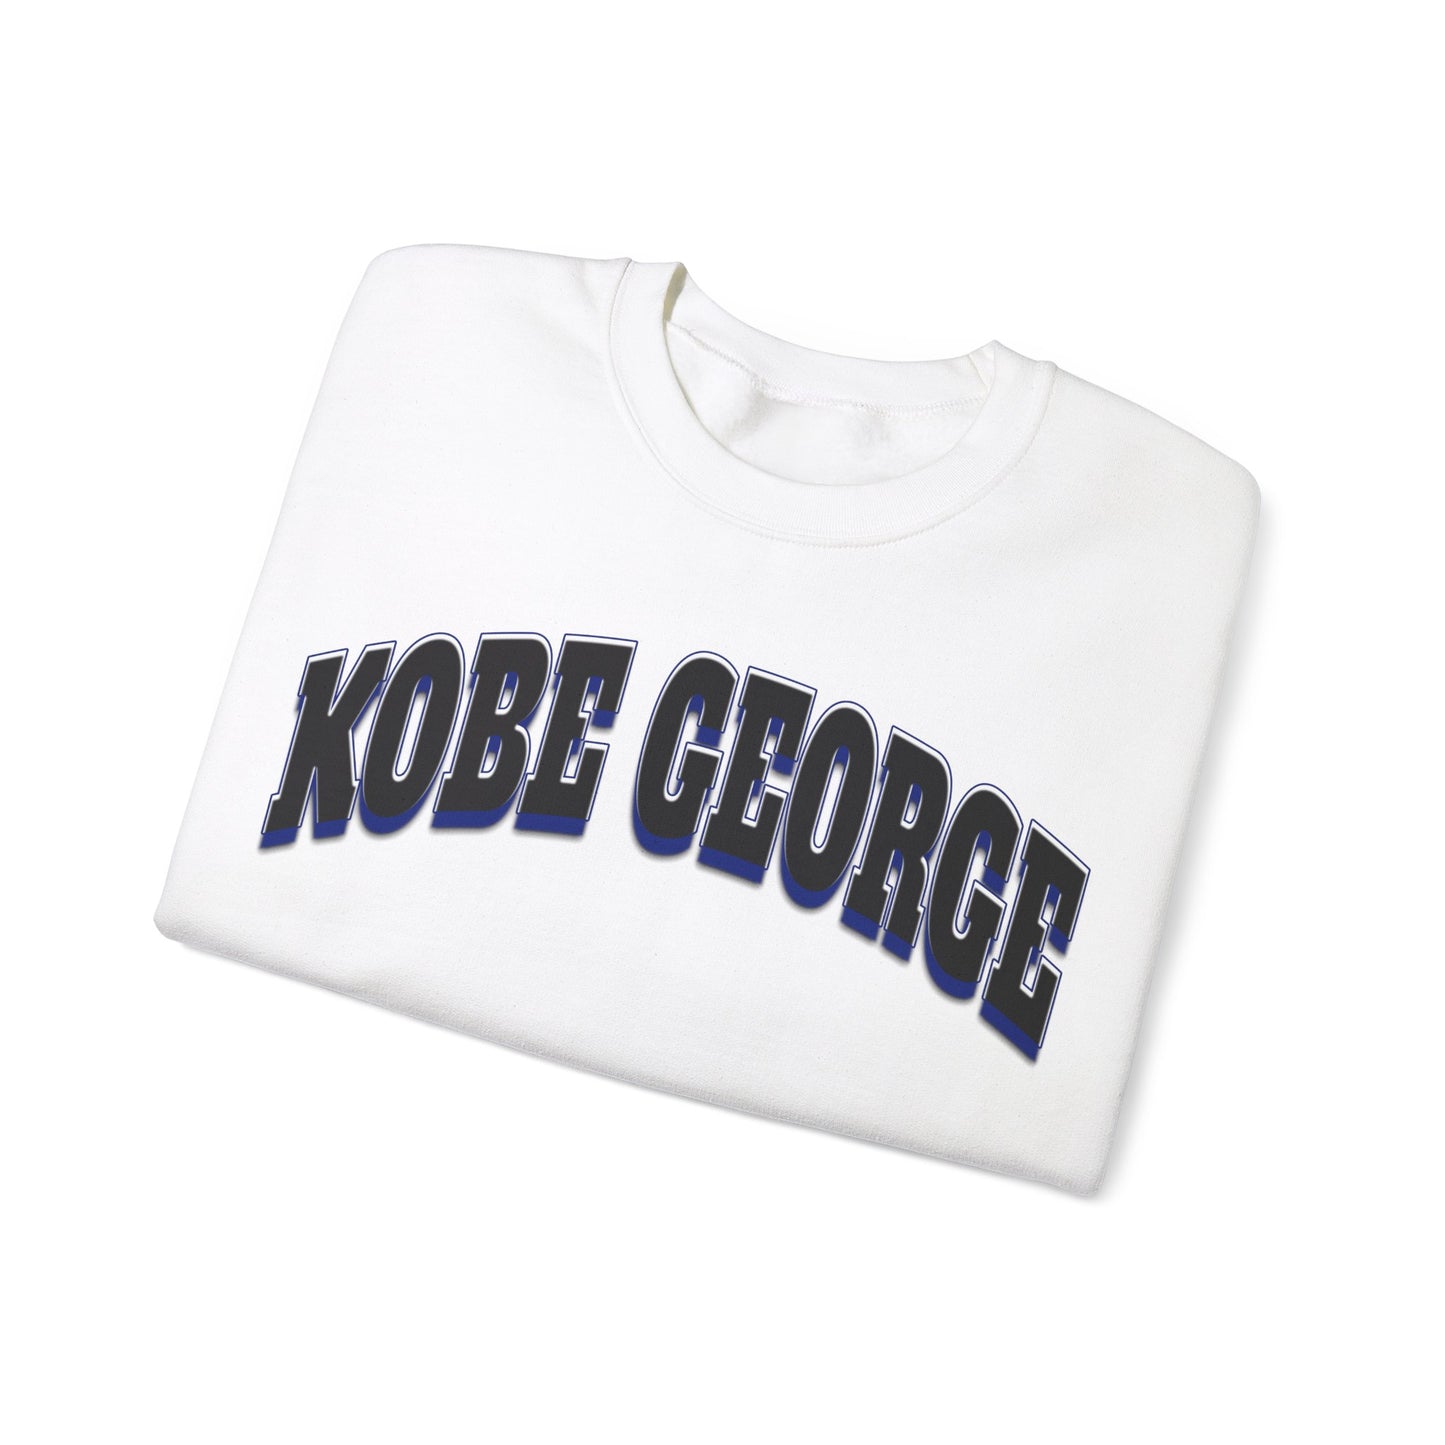 Kobe George Crewneck Sweatshirt